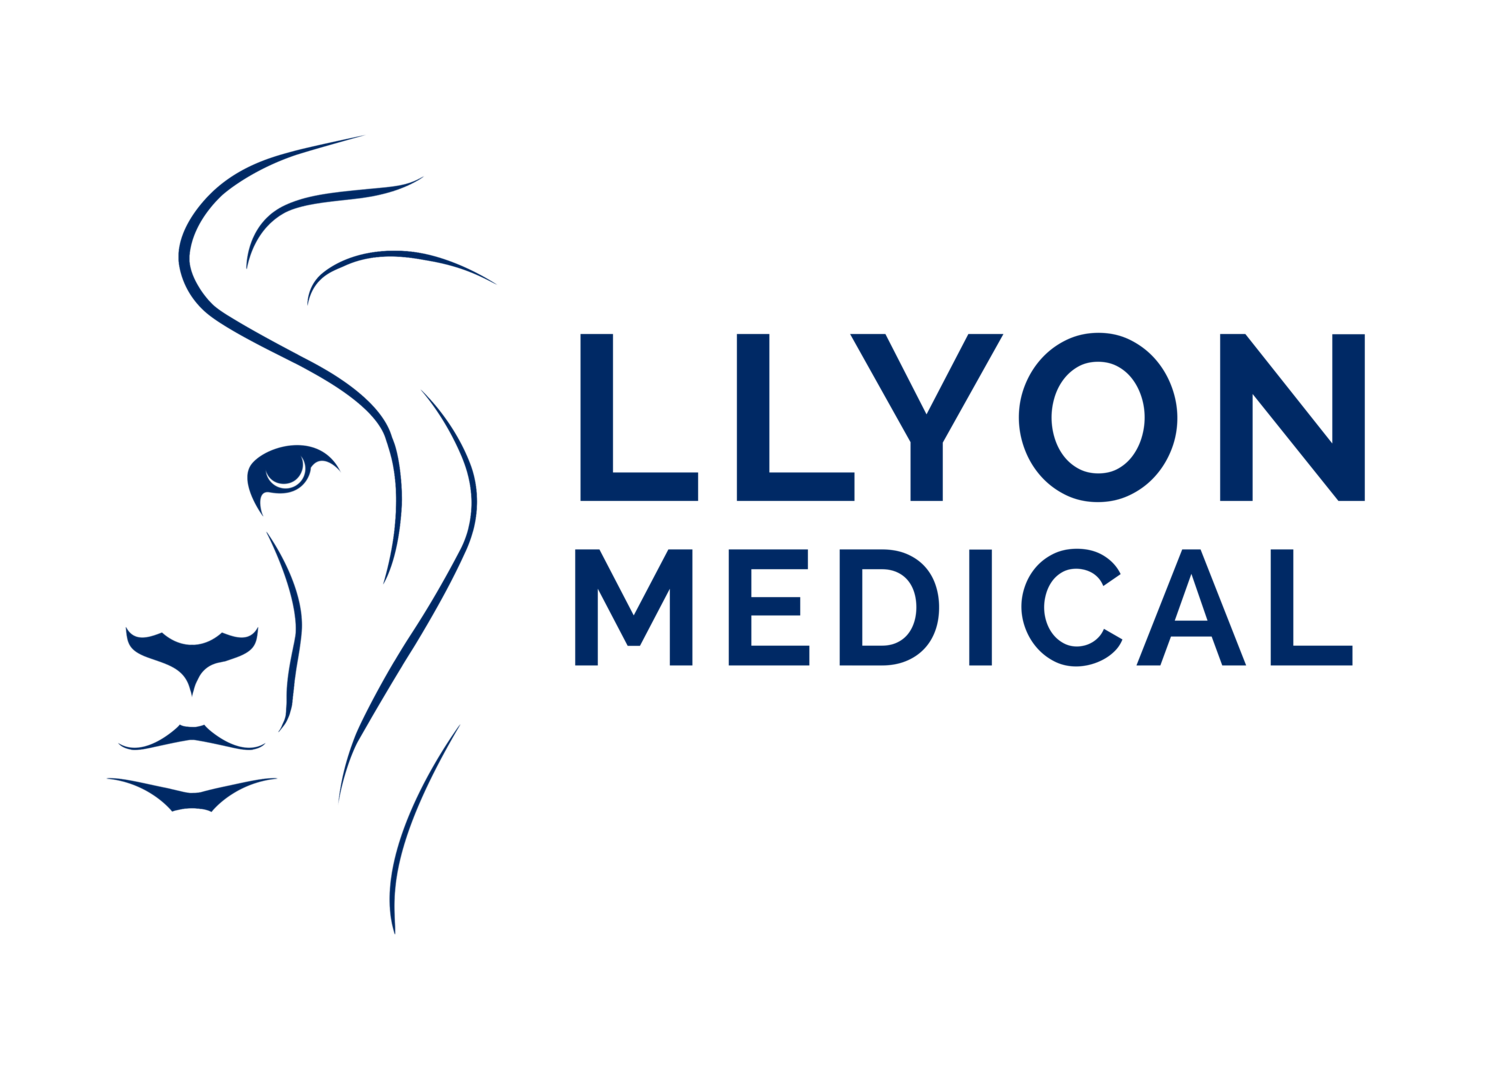 LLYON MEDICAL